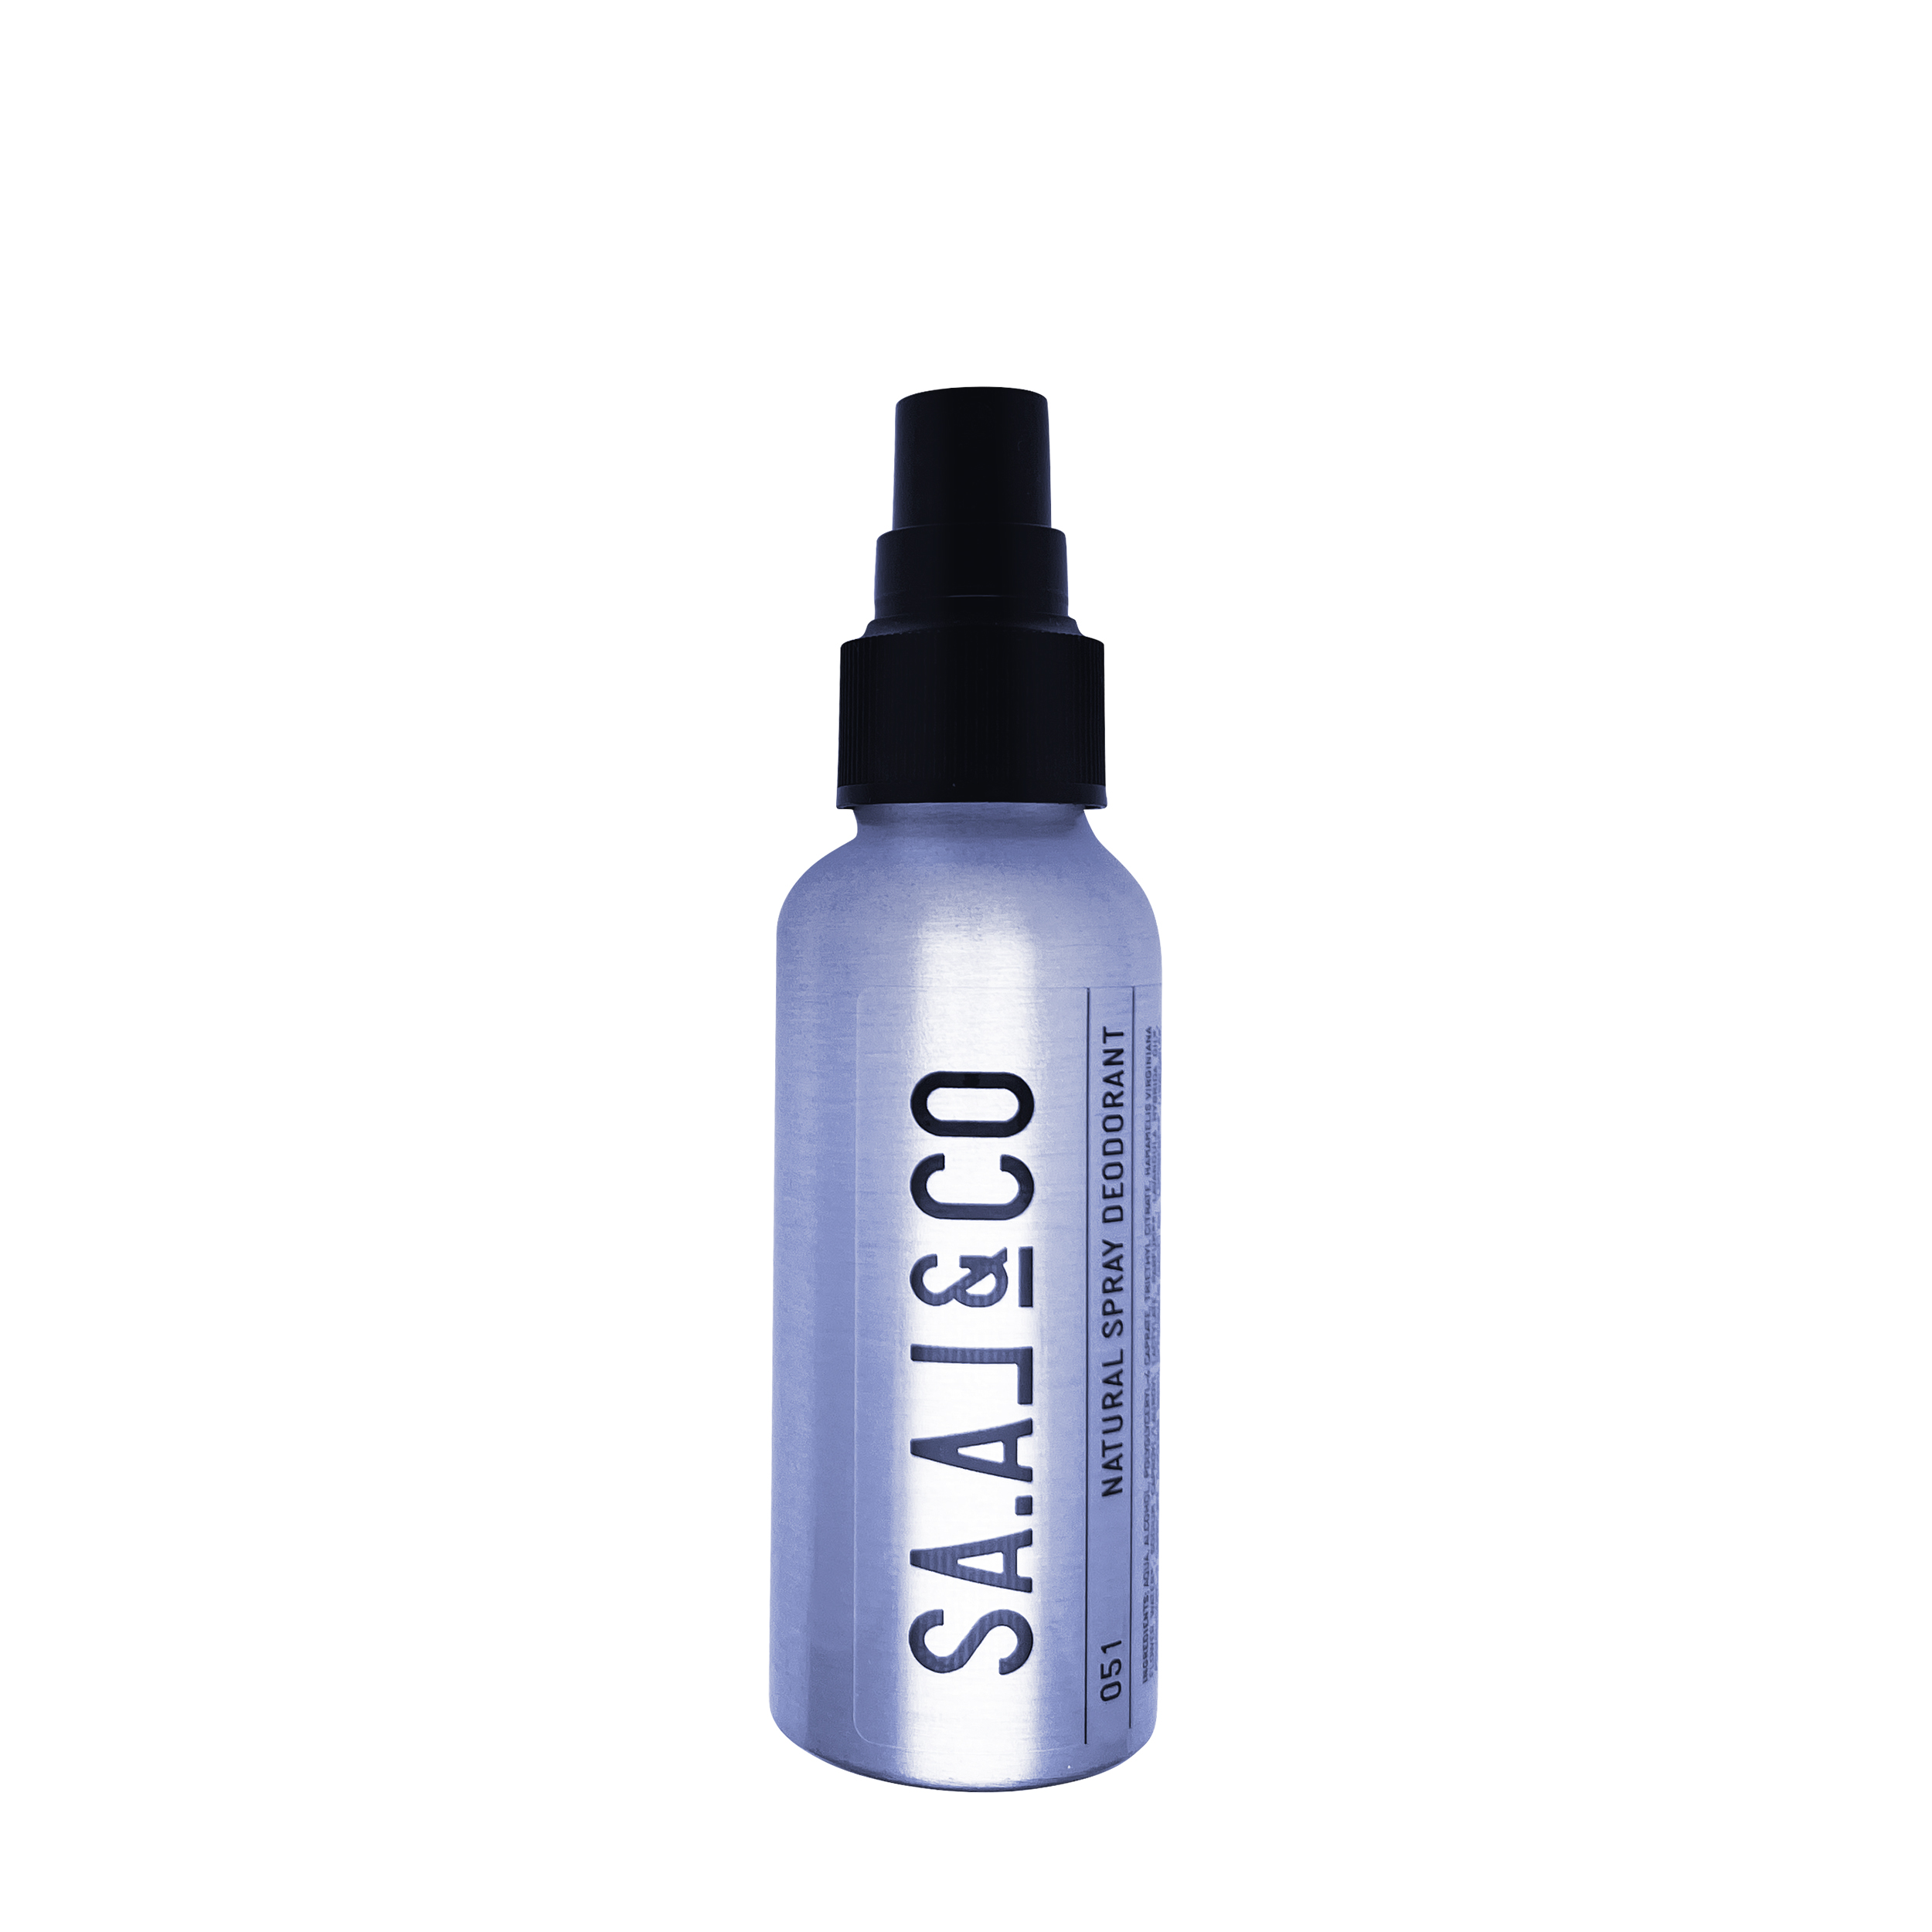 SA.AL&CO SA.AL&CO 051 Natural Spray Deodorant 100 ml - натуральный дезодорант-спрей 100 мл